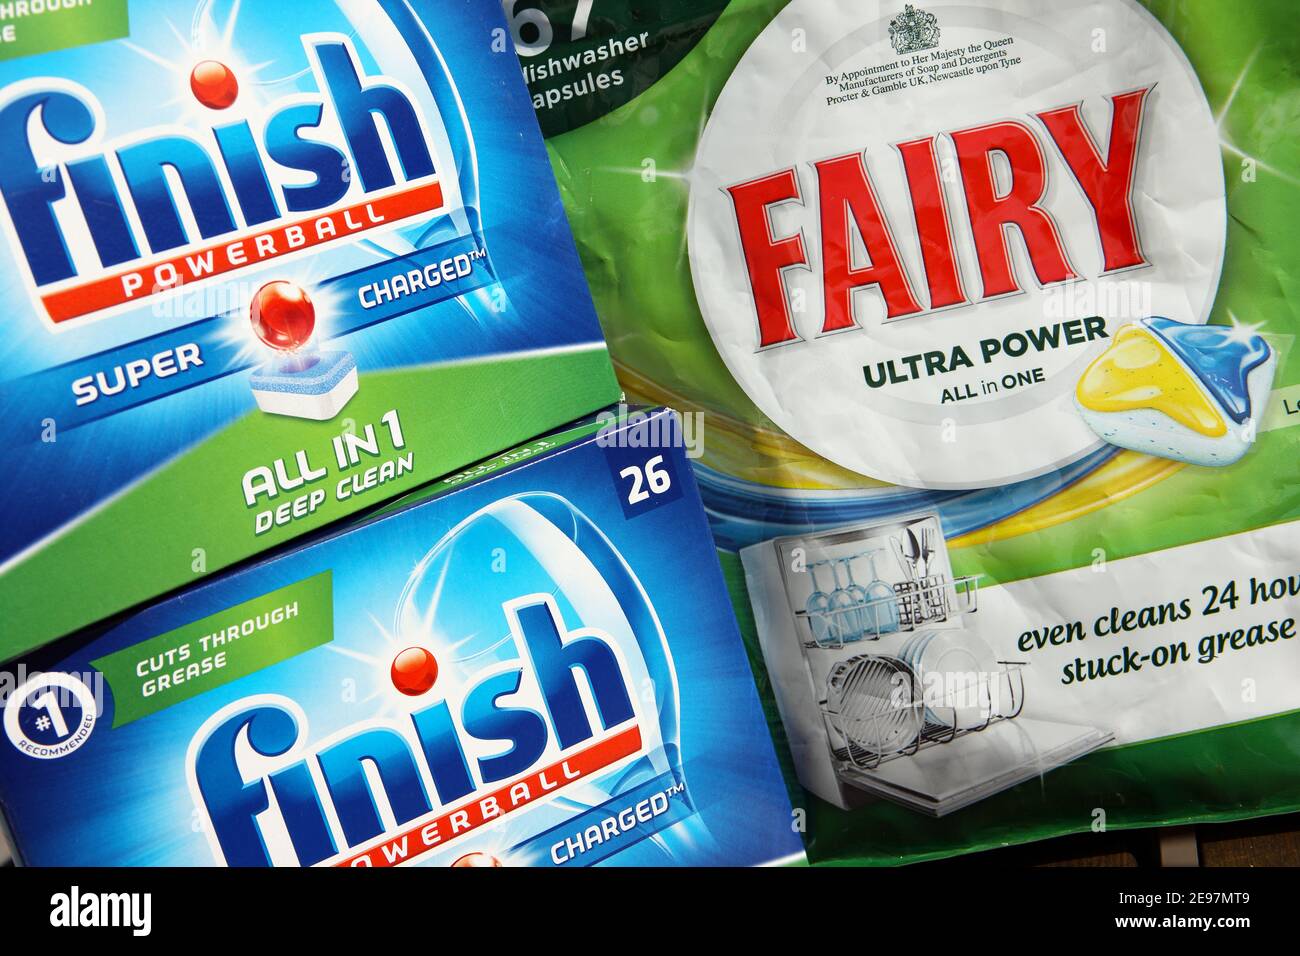 Finish and Fairy dishwasher tablets Stock Photo